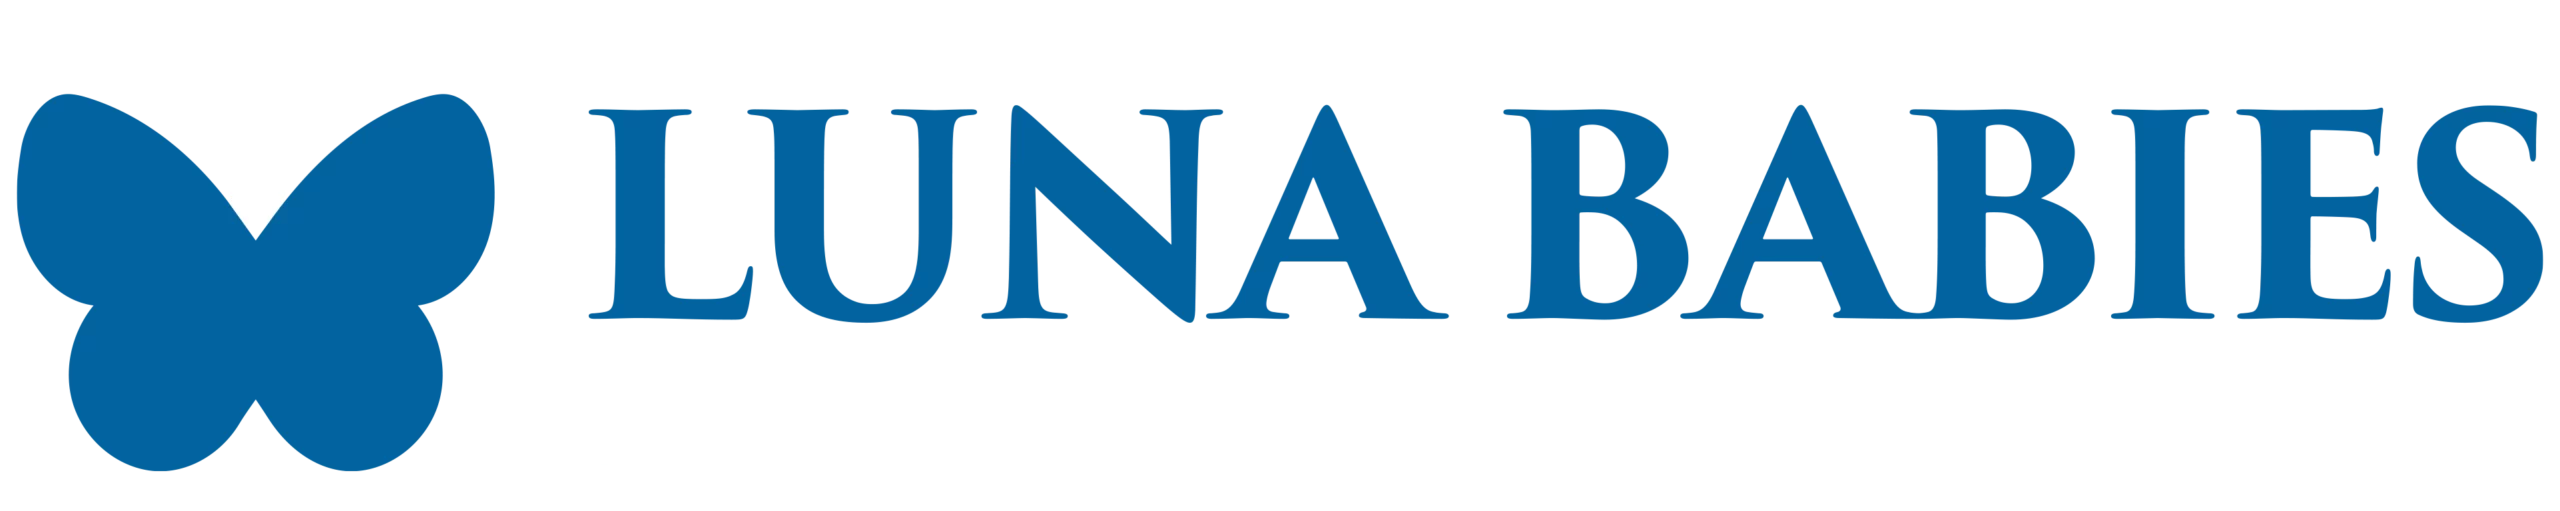 luna babies foundation logo in long format.